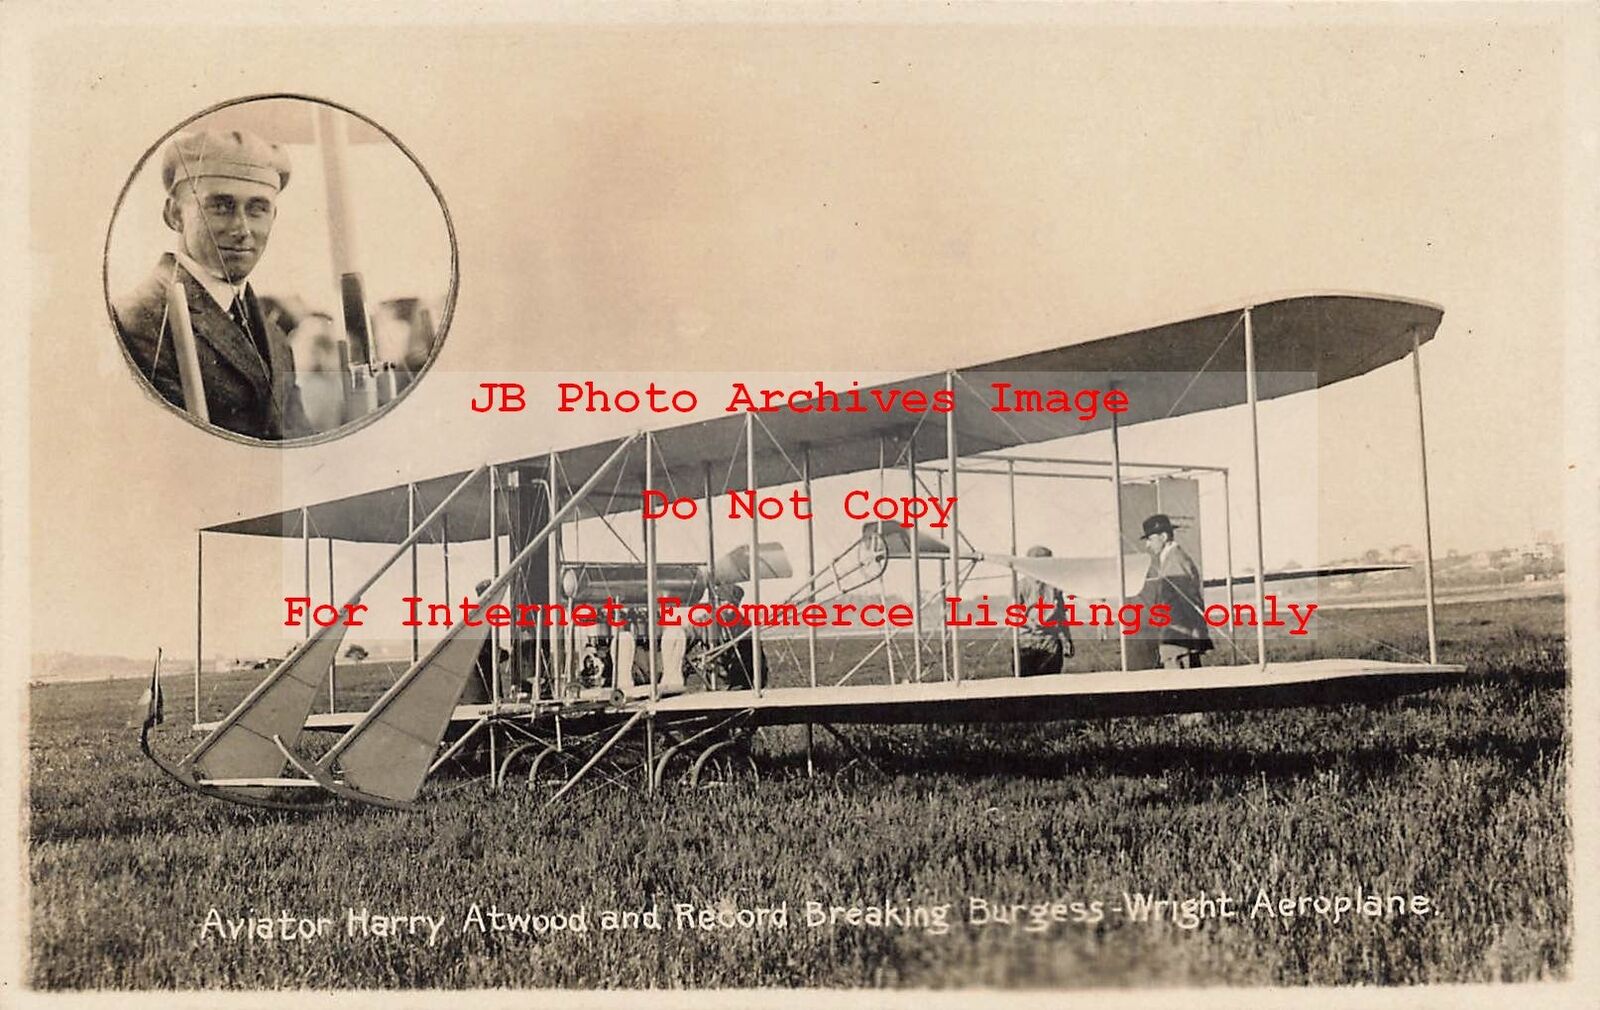 Early Aviation, RPPC, Aviator Harry Atwood, Burgess-Wright Aeroplane